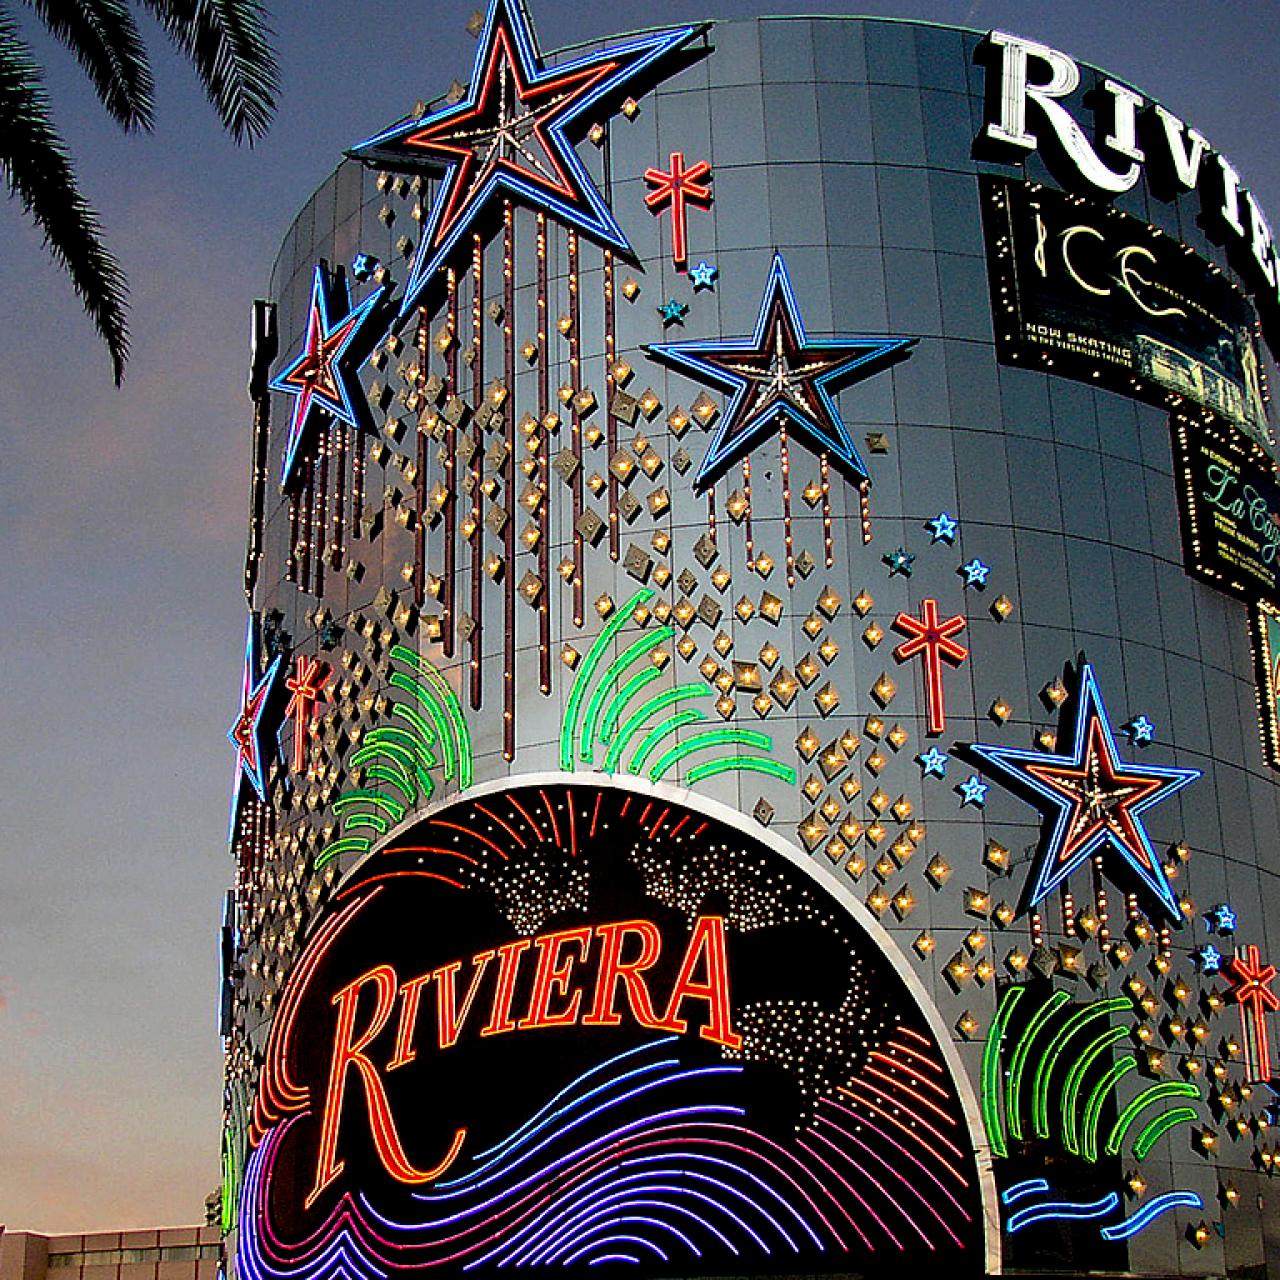 Riviera Hotel & Casino in - Las Vegas, NV